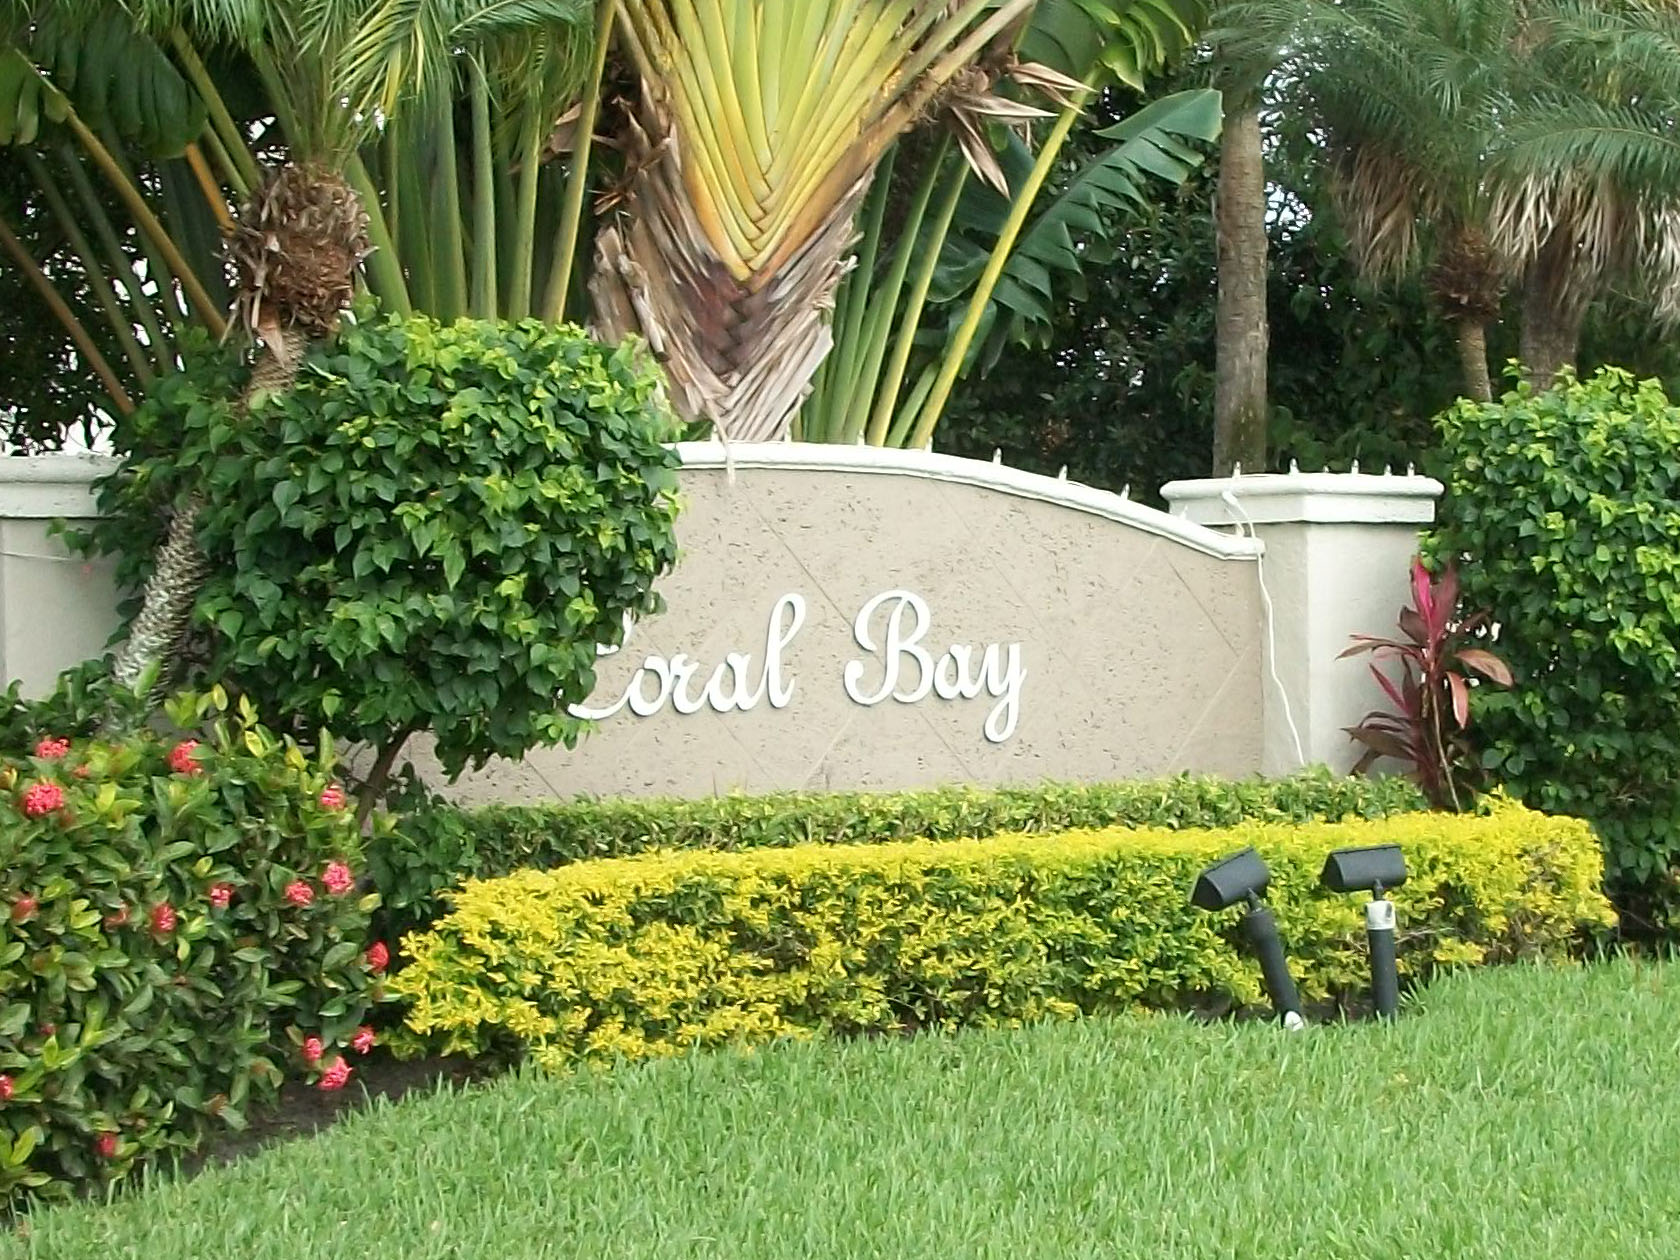 Coral Bay foreclosures in Boca Raton